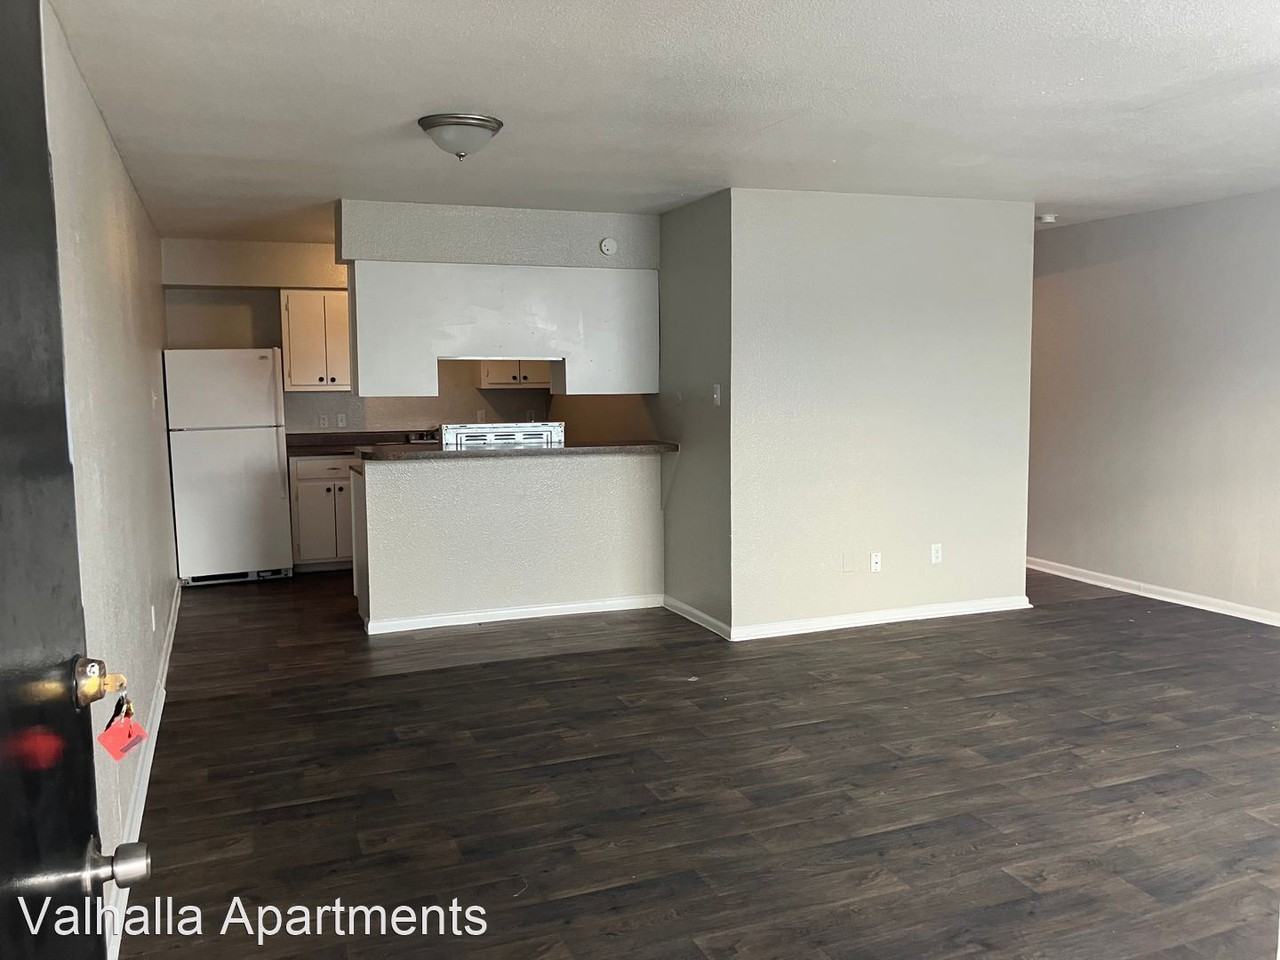 Veranda Apartments - 6433 S Staples St, Corpus Christi, TX 78413